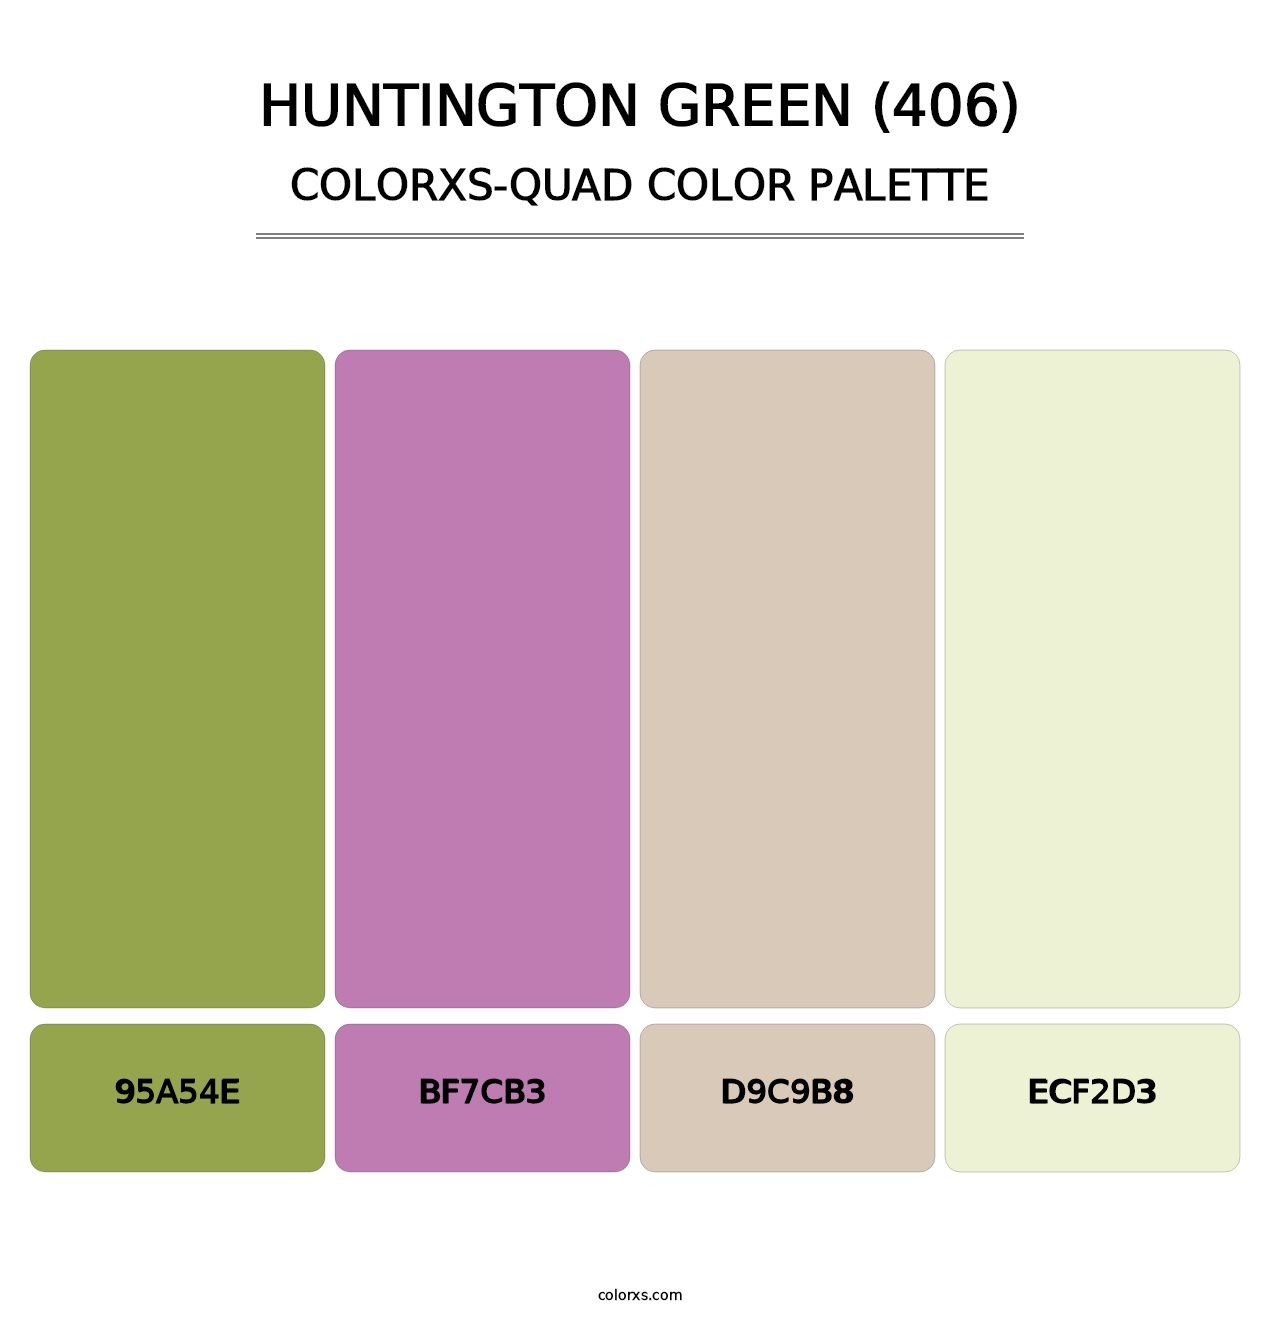 Huntington Green (406) - Colorxs Quad Palette